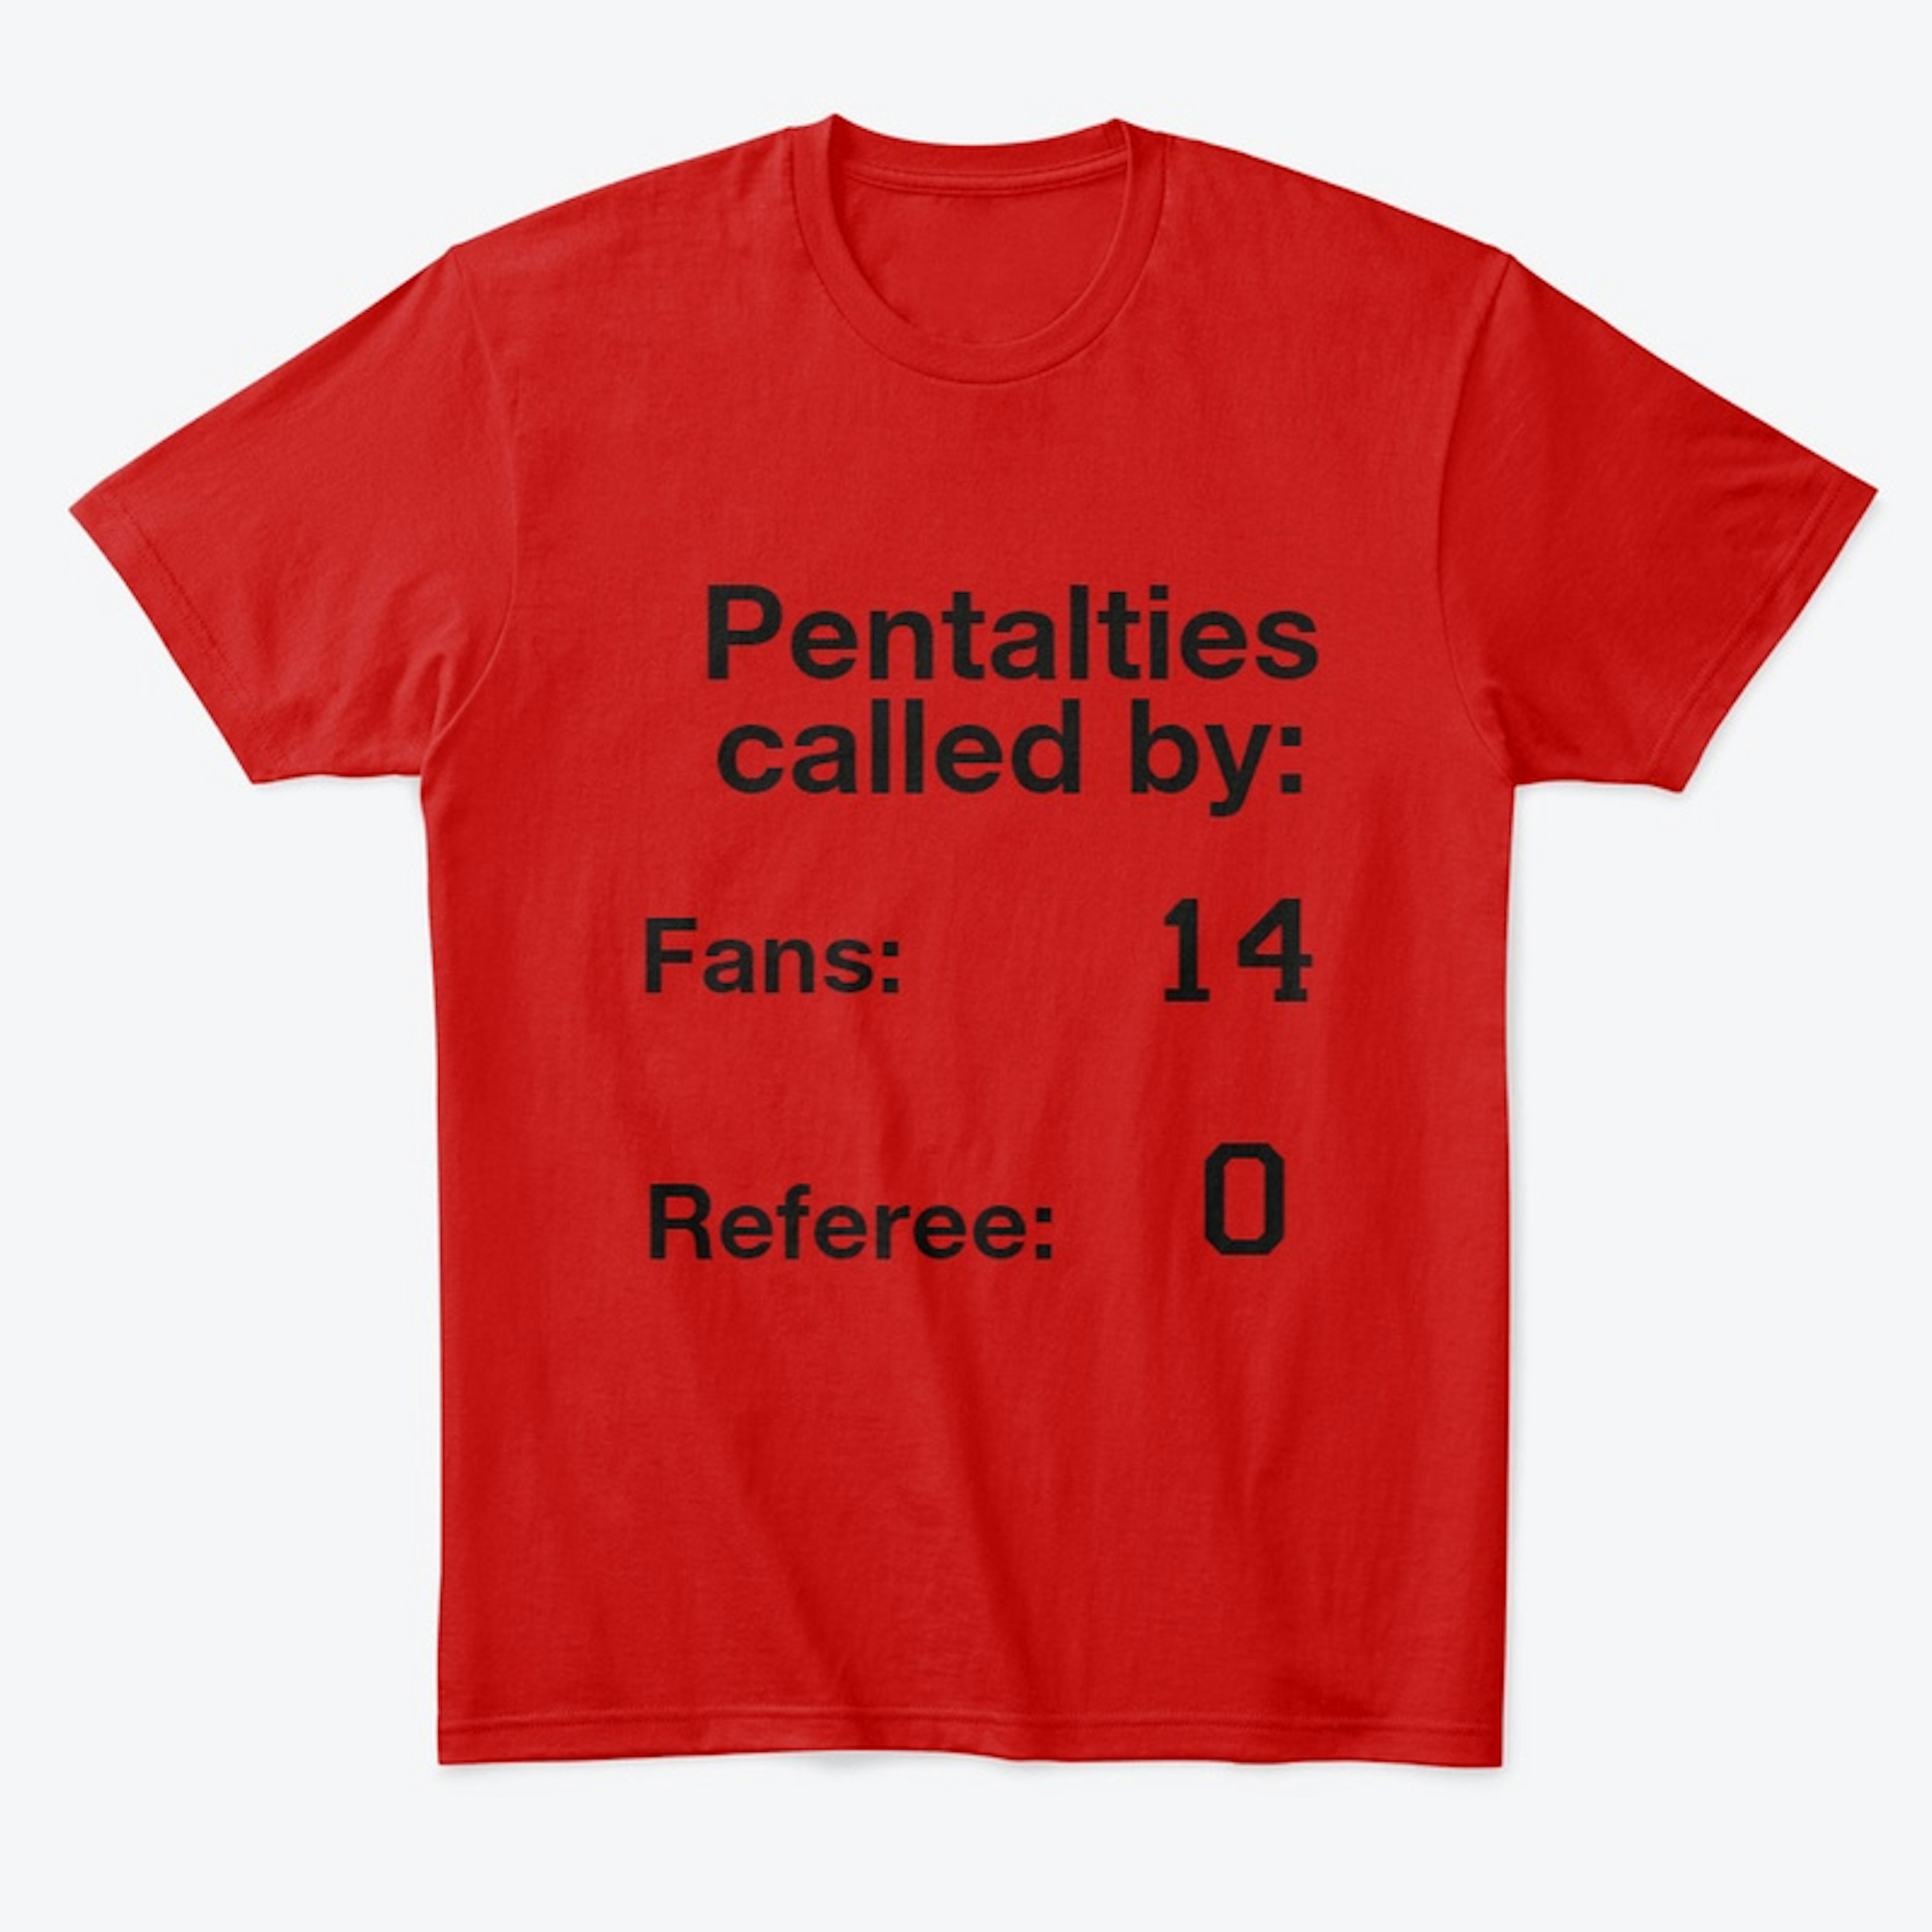 Penalty calls